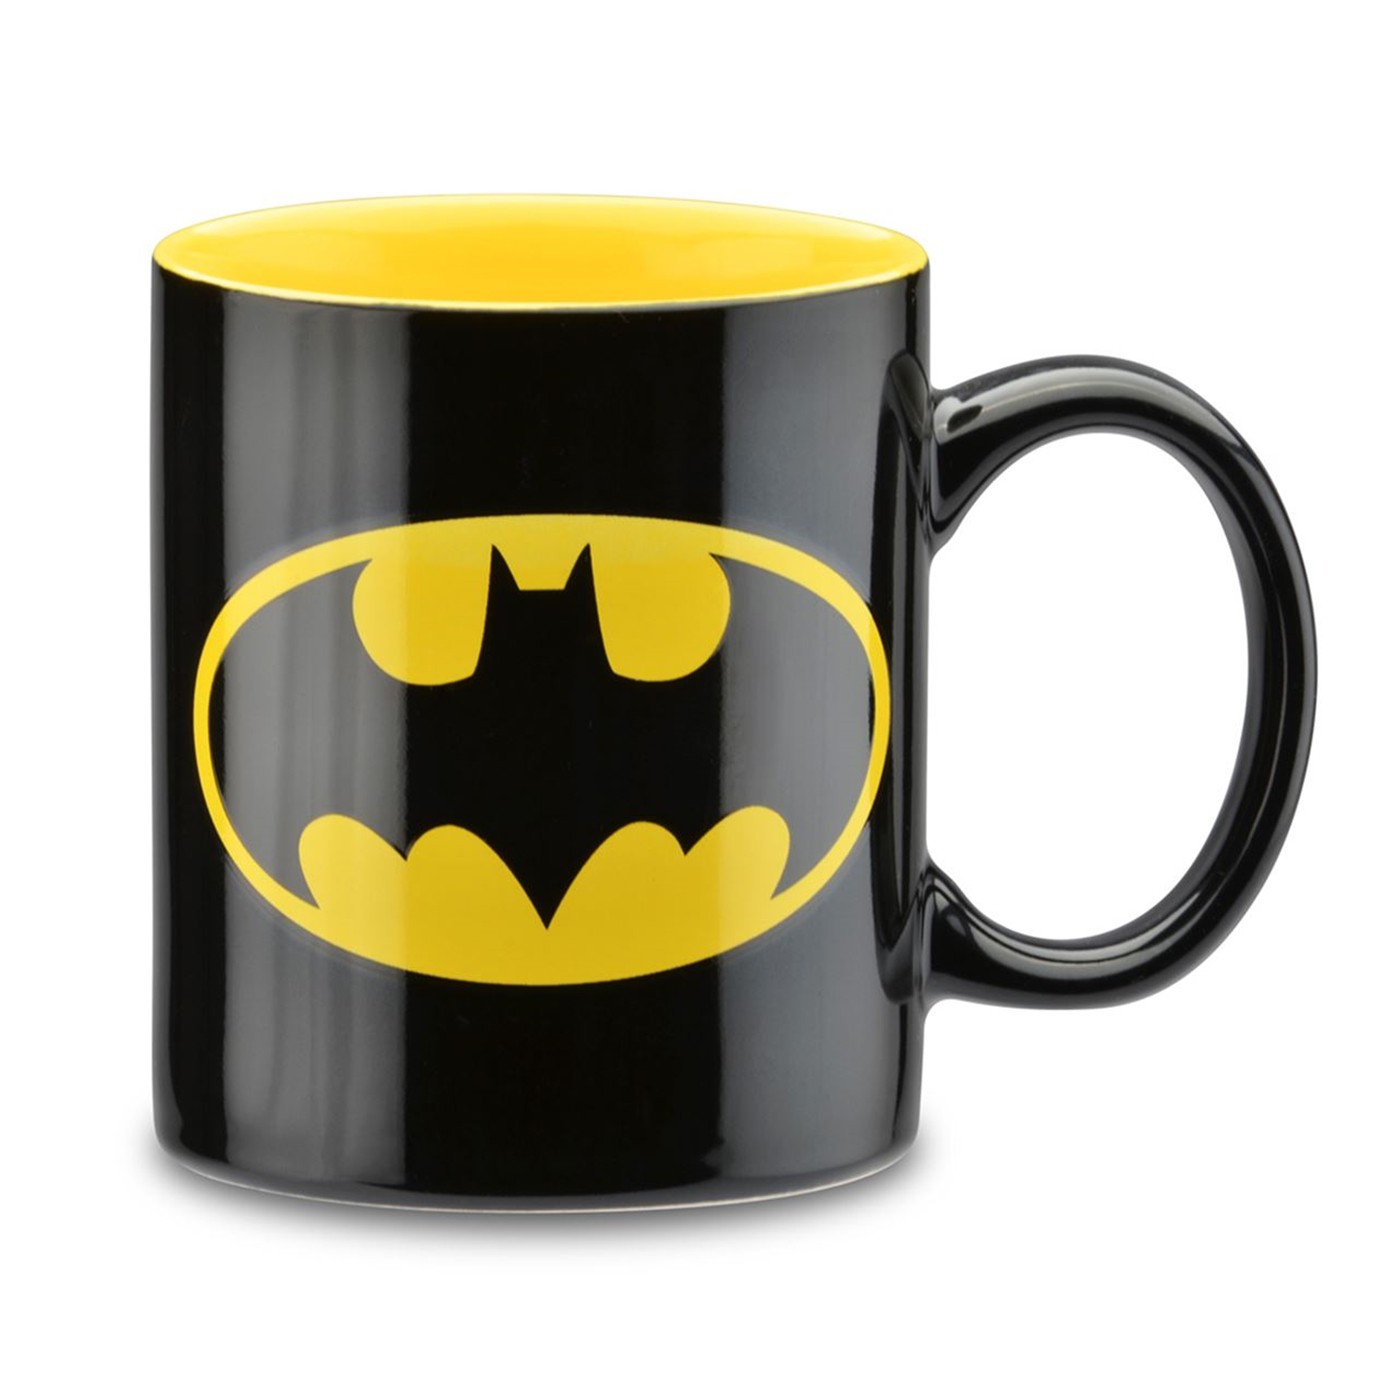 Batman 1-Cup Coffee Maker with Mug